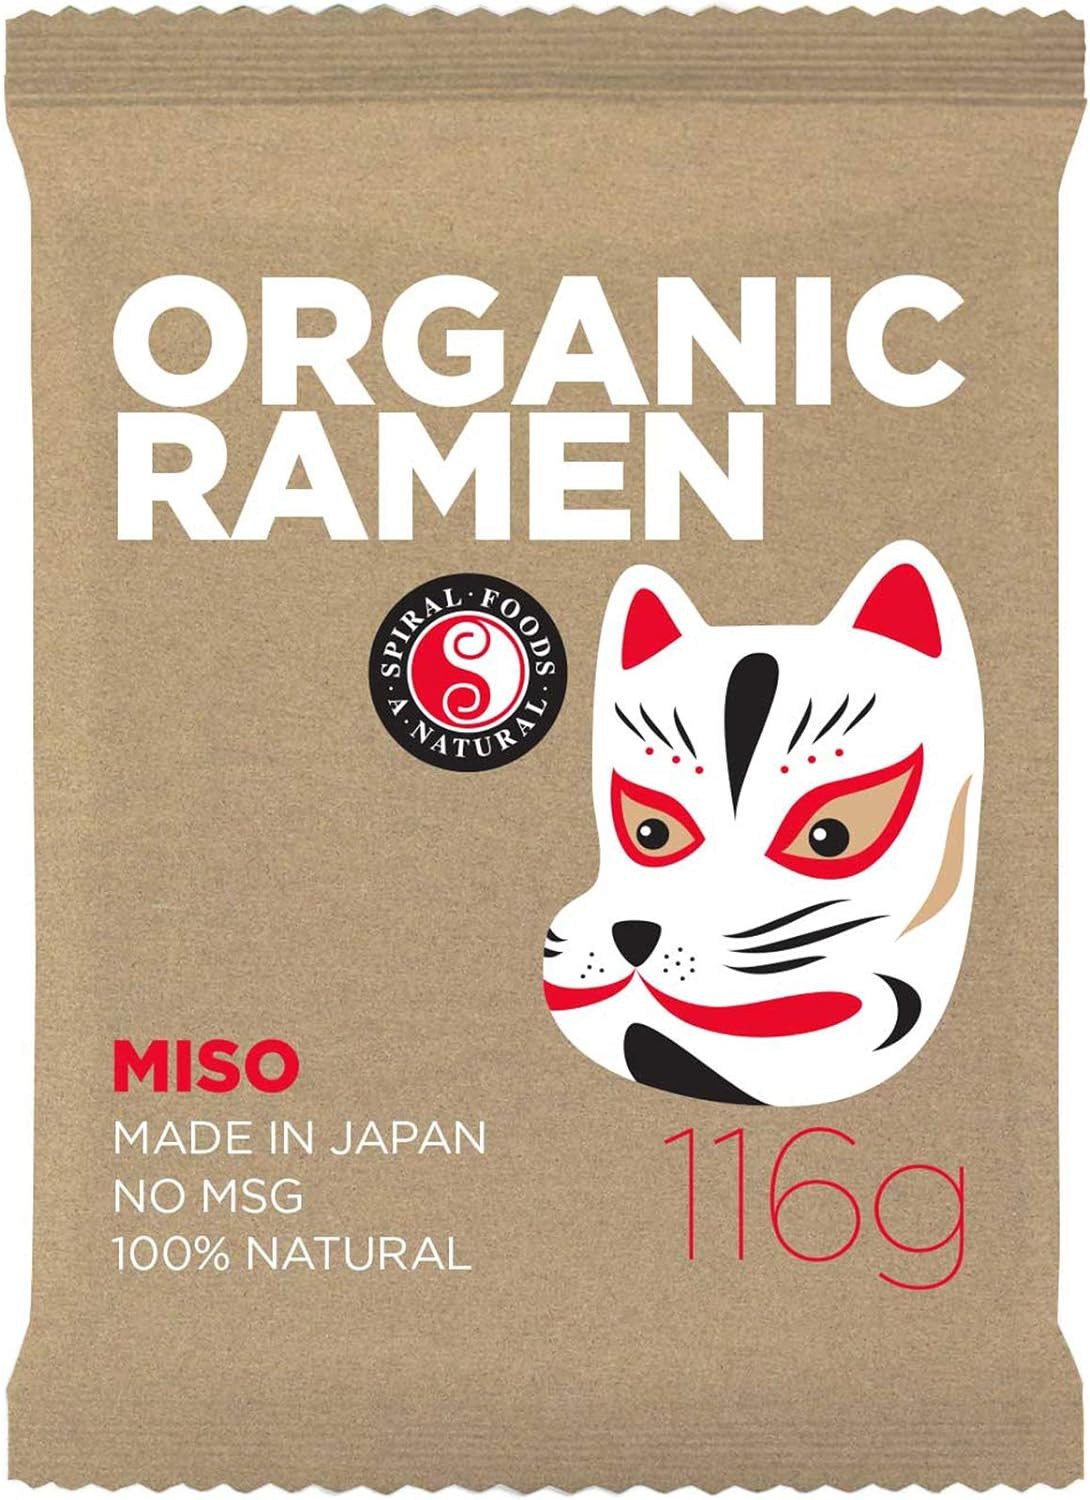 Spiral Food Organic Ramen Miso 116g